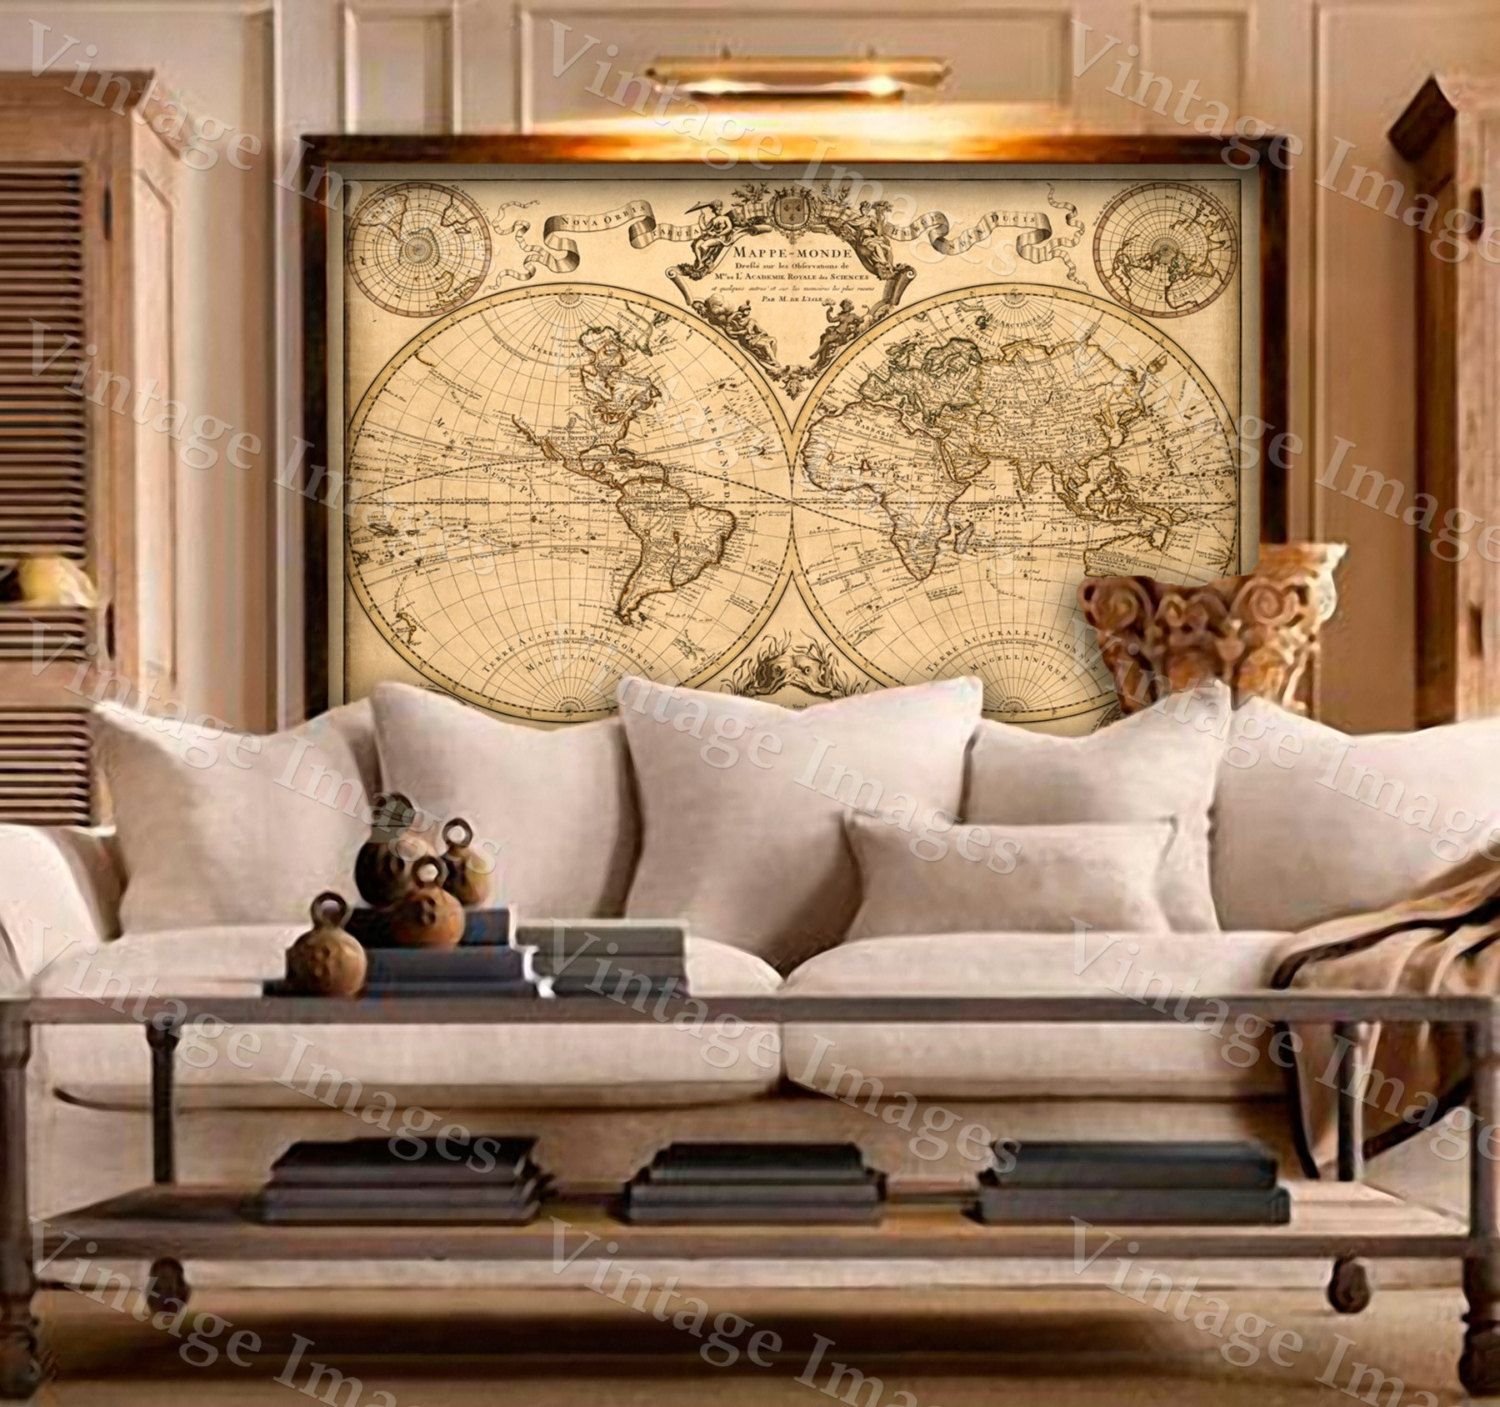 Restoration Hardware Fireplace Inspirational 1720 Old World Map World Map Wall Art Historic Map Antique